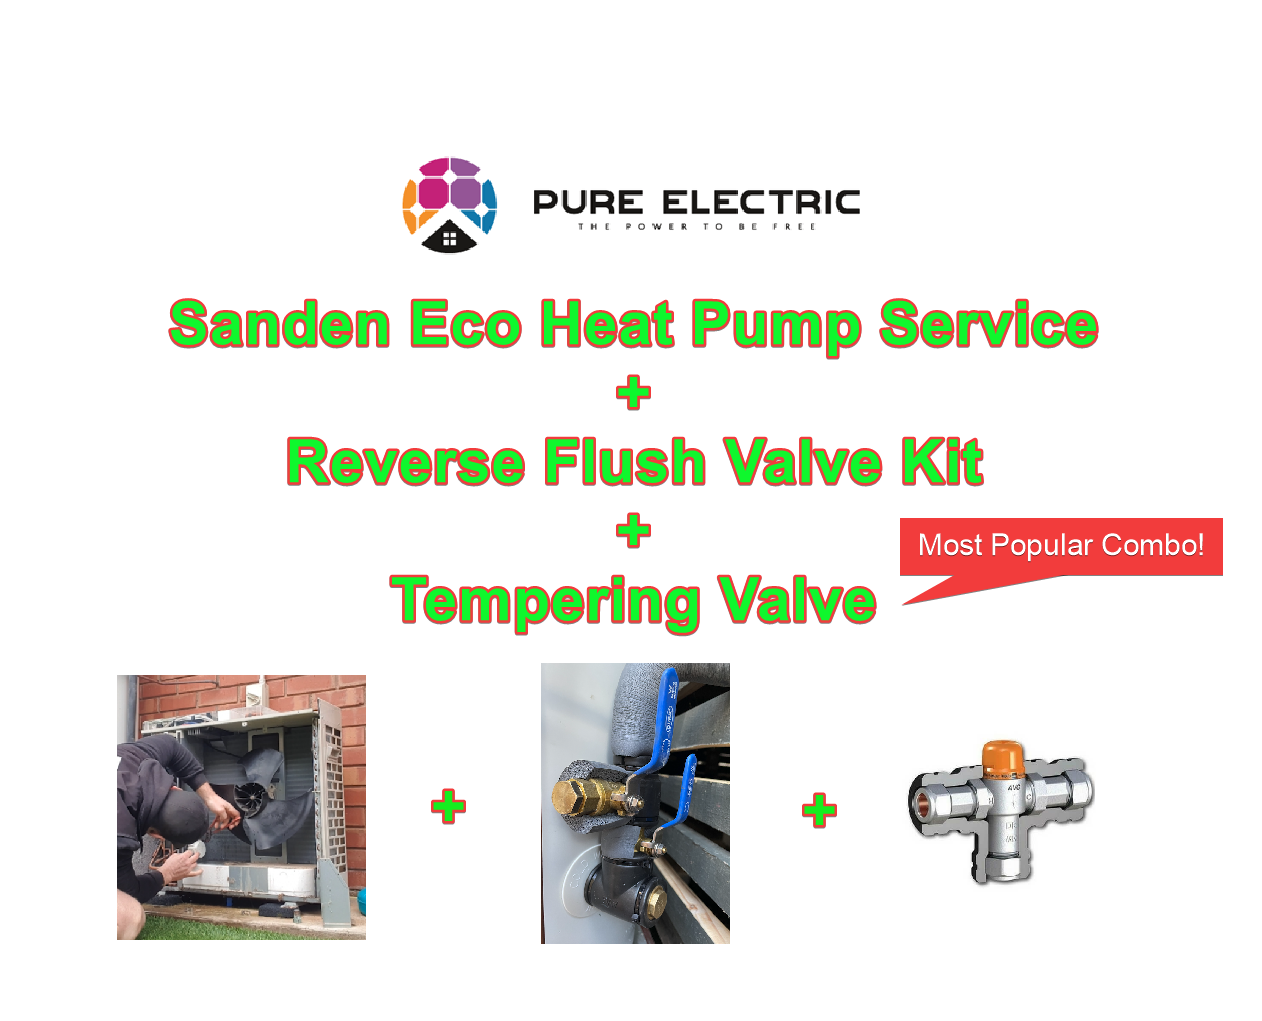 Sanden Eco Heat Pump Service + Reverse Flush Valve Kit + Tempering Valve